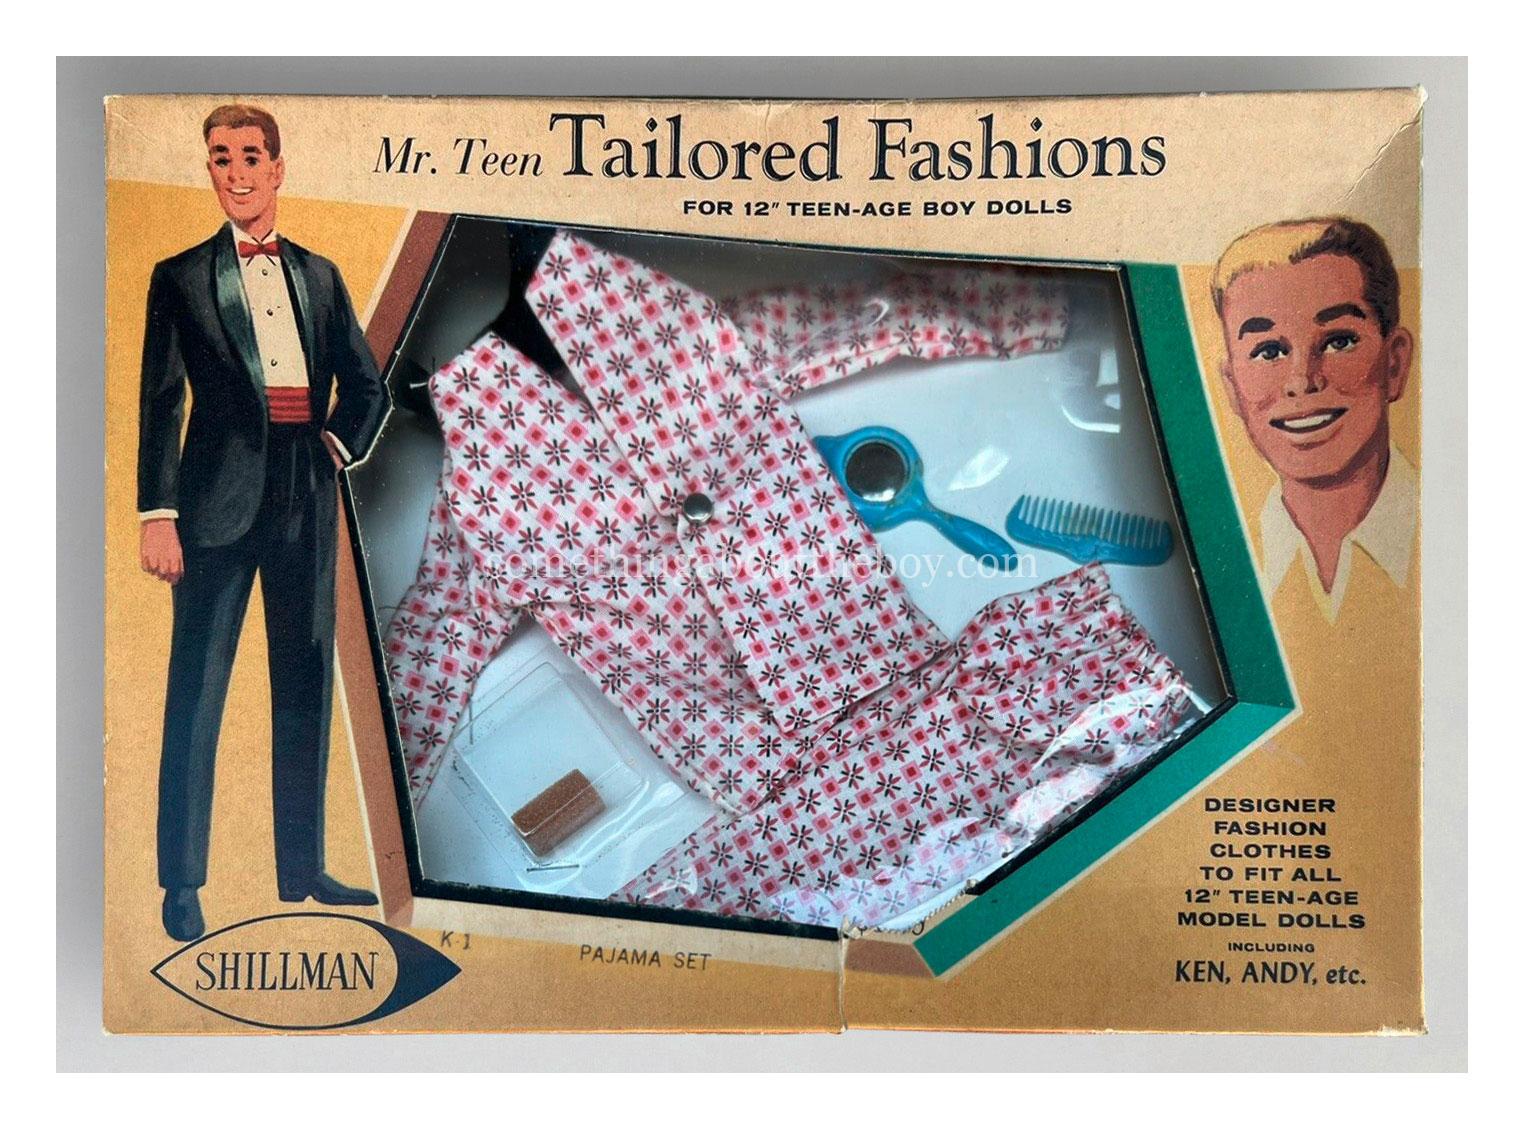 Mr. Teen Tailored Fashions K1 Pajama Set by Shillman